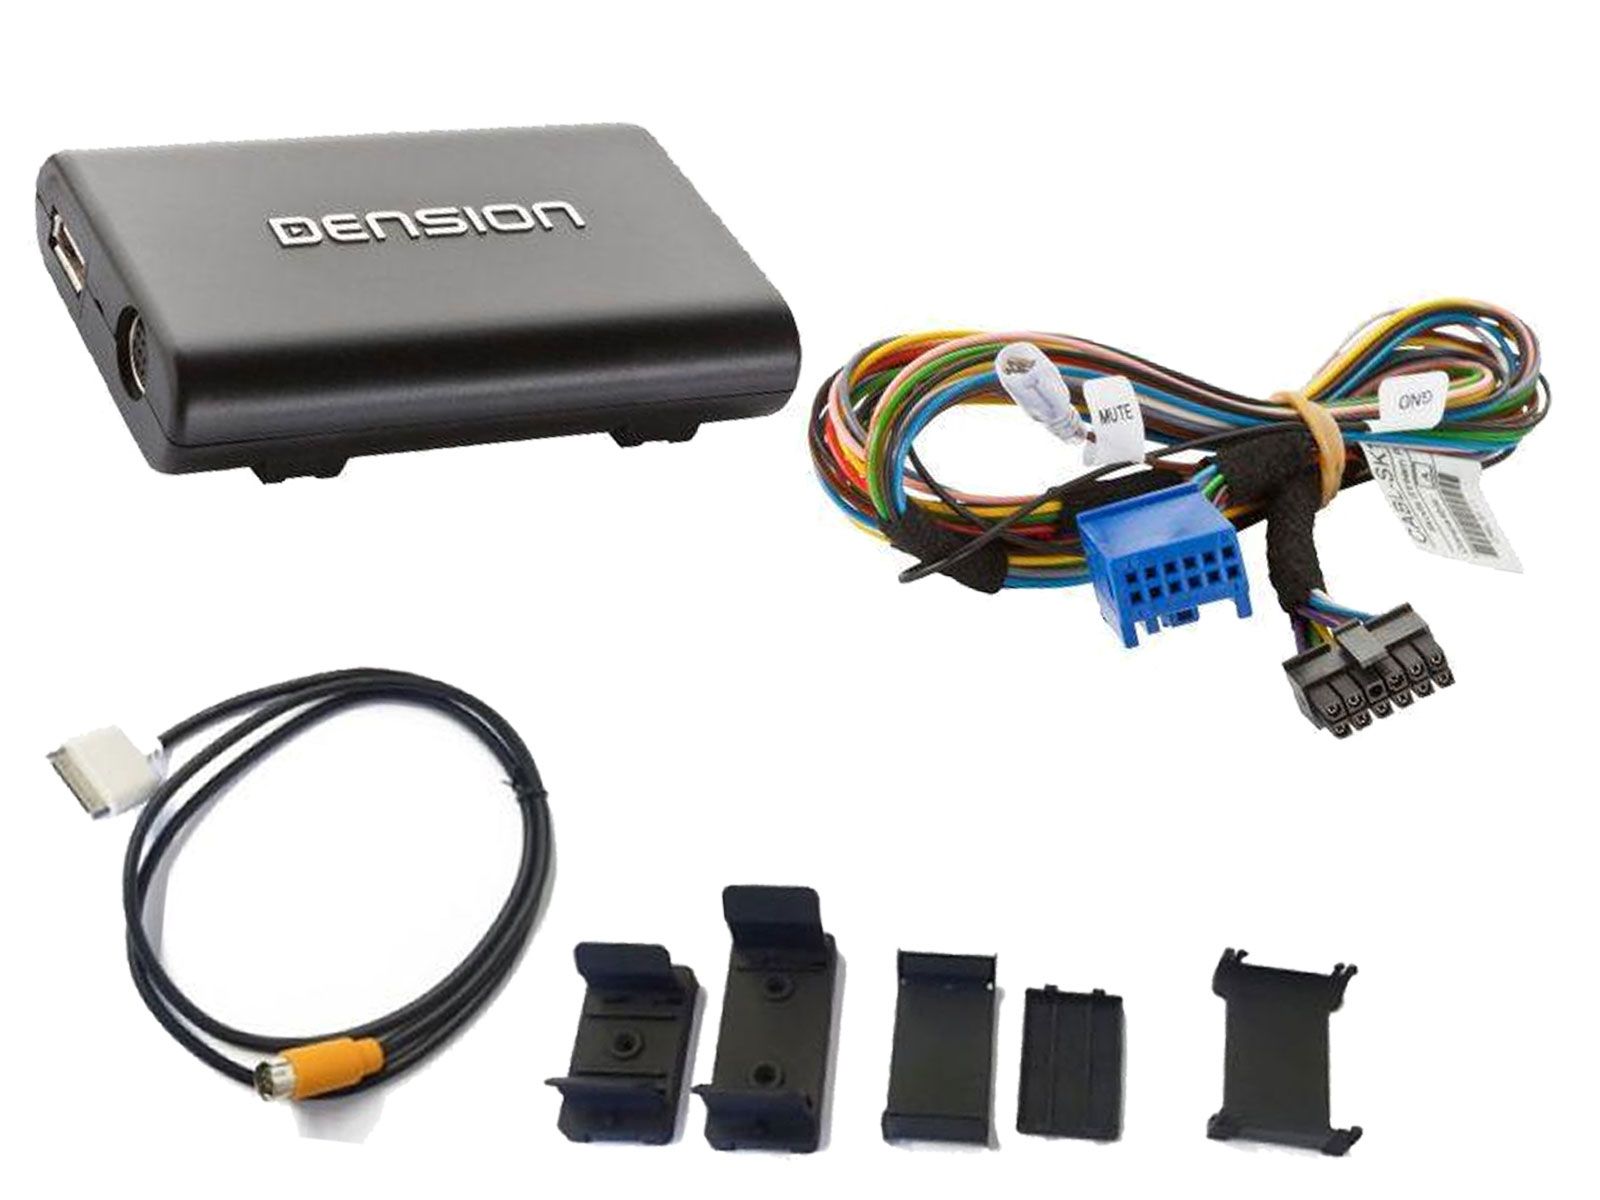 Dension Gateway Lite + Dock Cable - iPod / iPhone / USB Interface - Skoda (2004-2009) - Quadlock